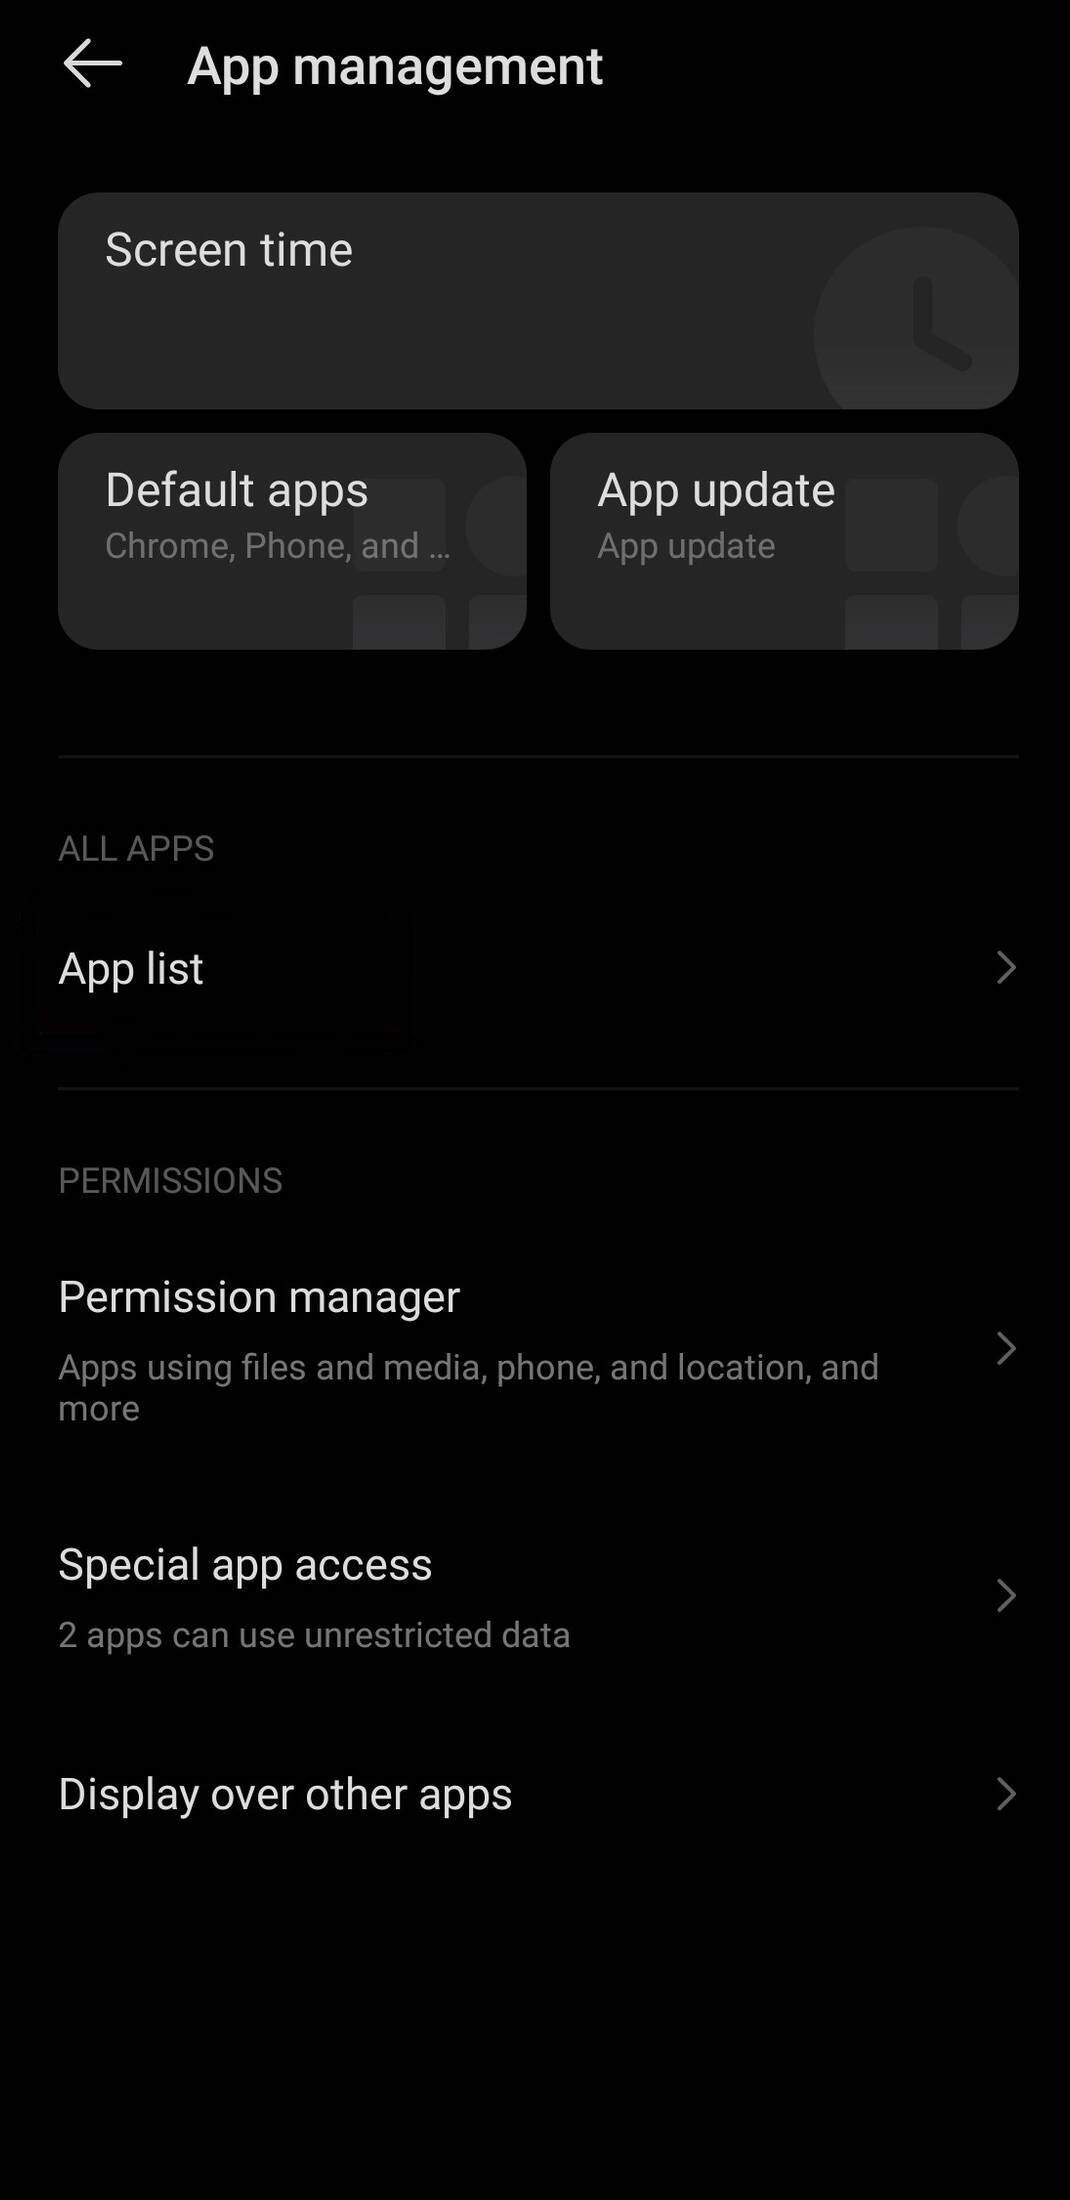 App management screen showing the App List button